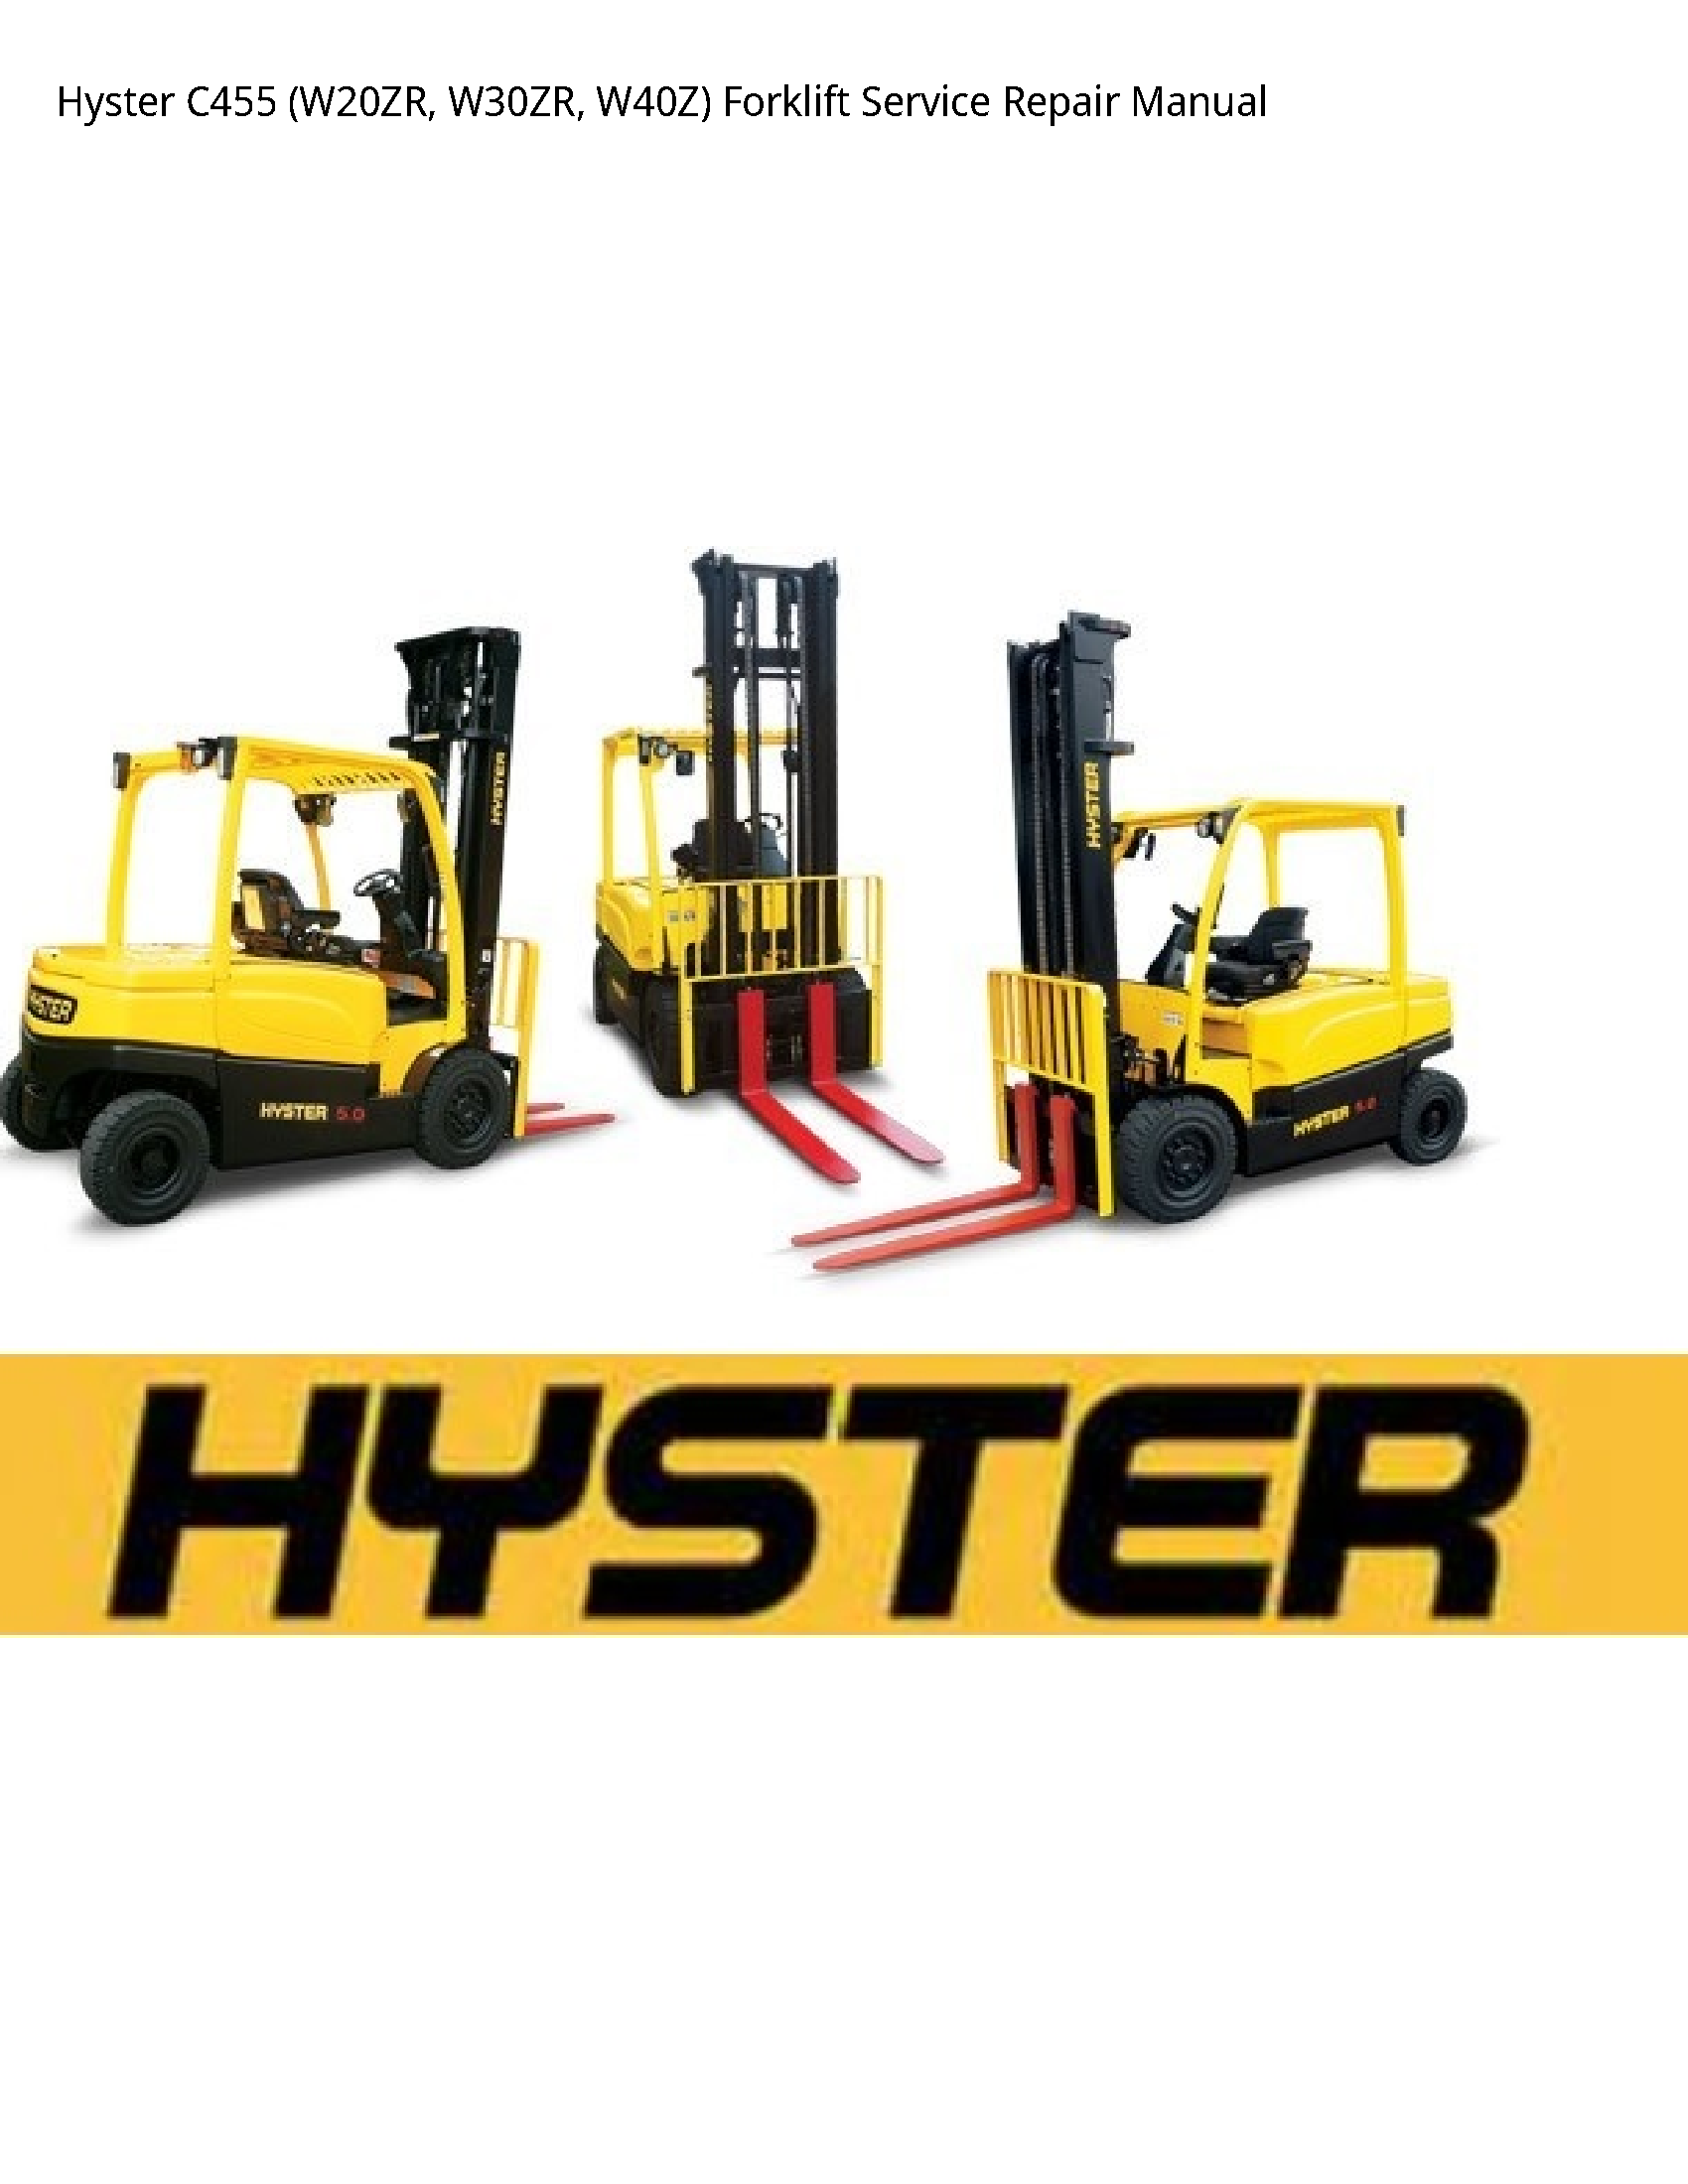 Hyster C455 Forklift manual